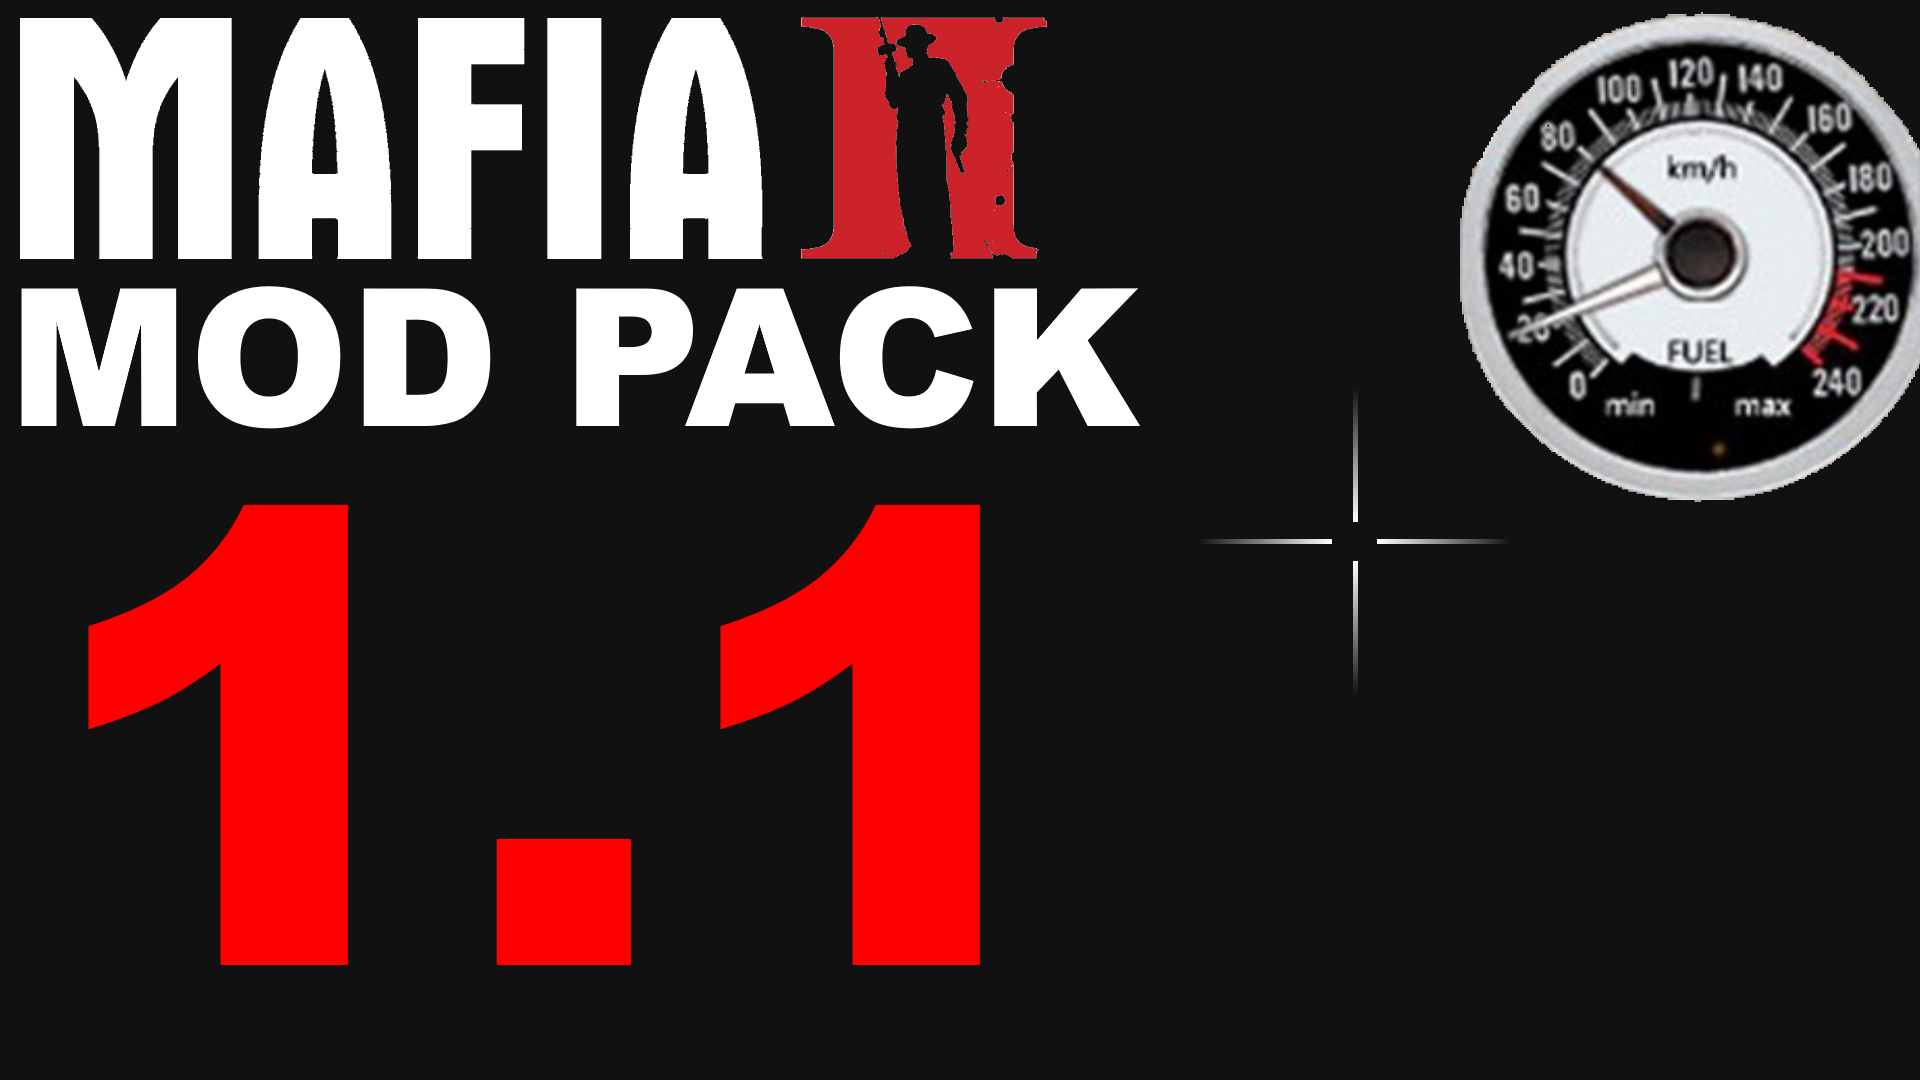 mafia 2 sds en free download